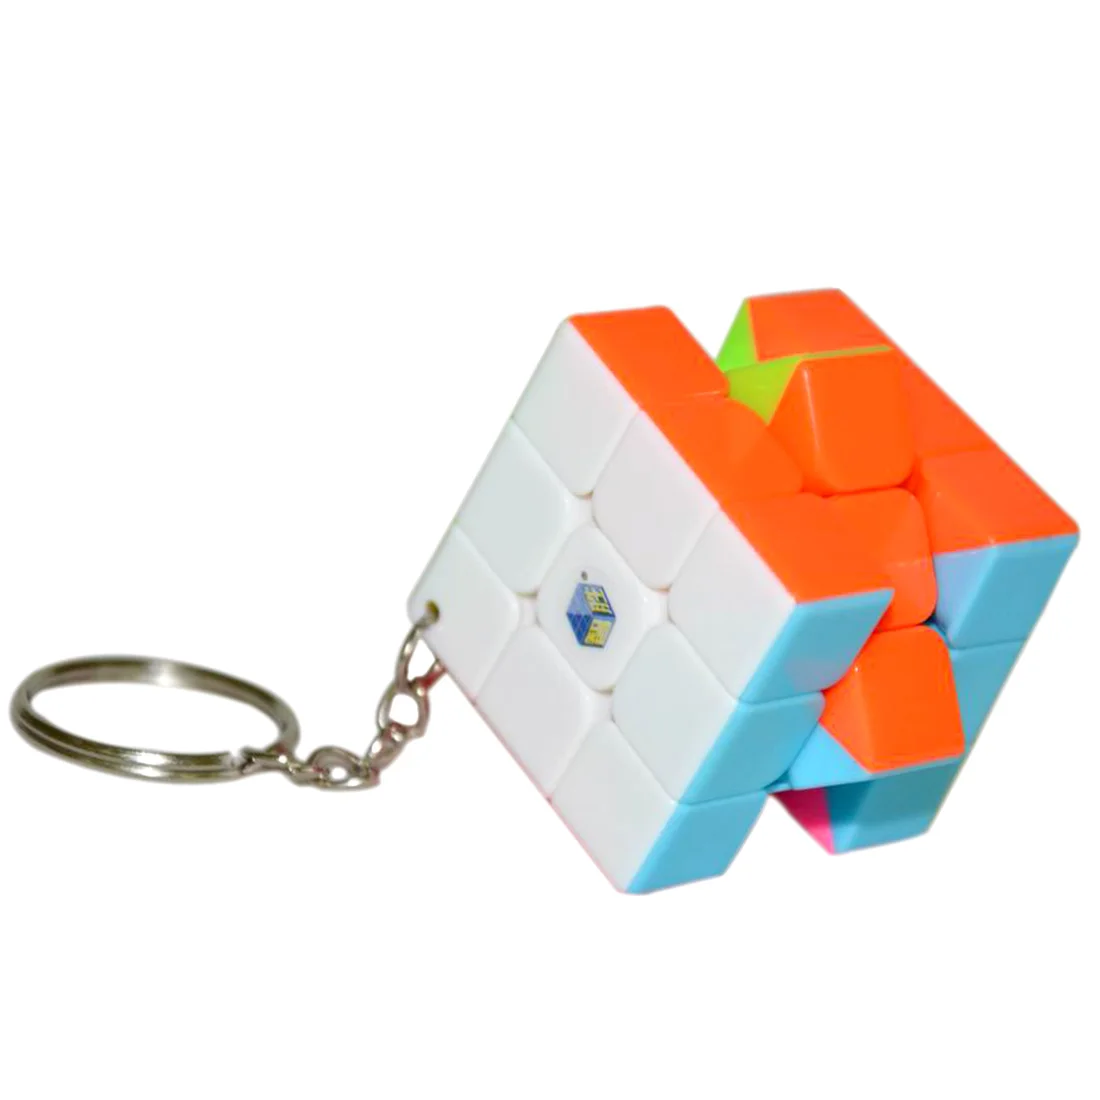 Yuxin YuQiLin Mini 3x3x3 Невидимый волшебный куб speed Cube с кольцом для ключей-розовый